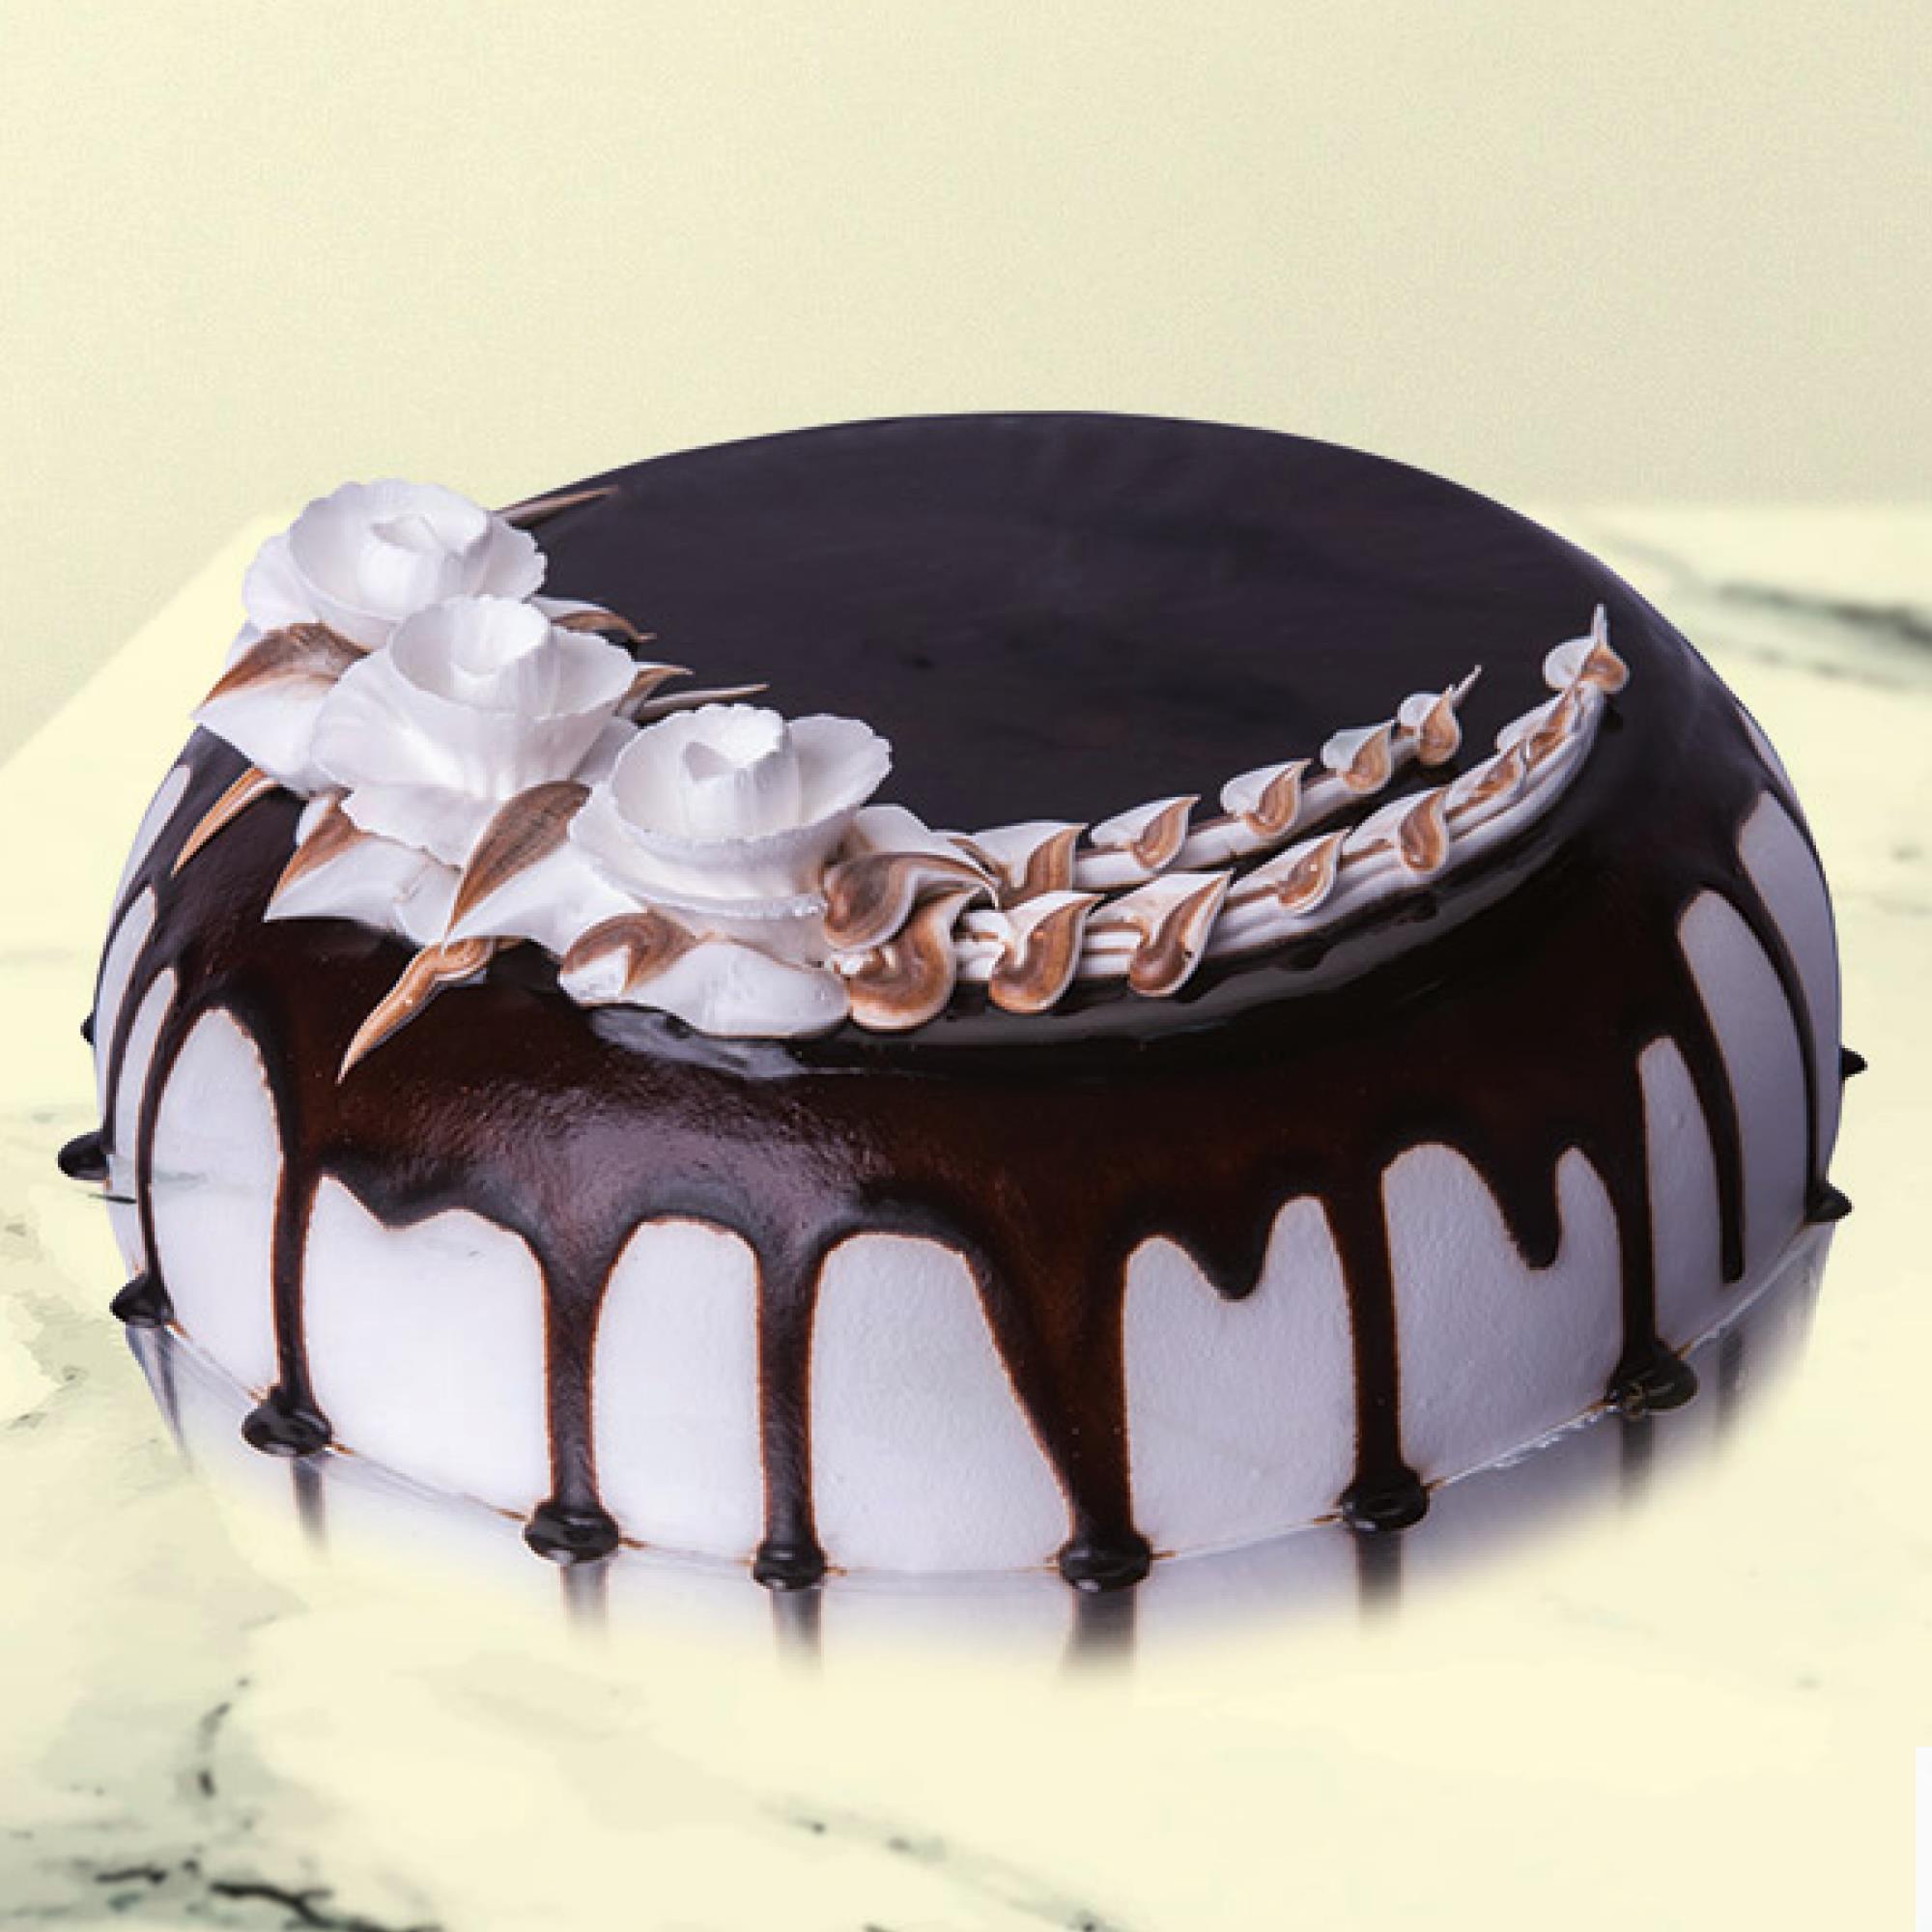 Buy/Send Cream Drop Chocolate Cake 1 Kg Online- FNP